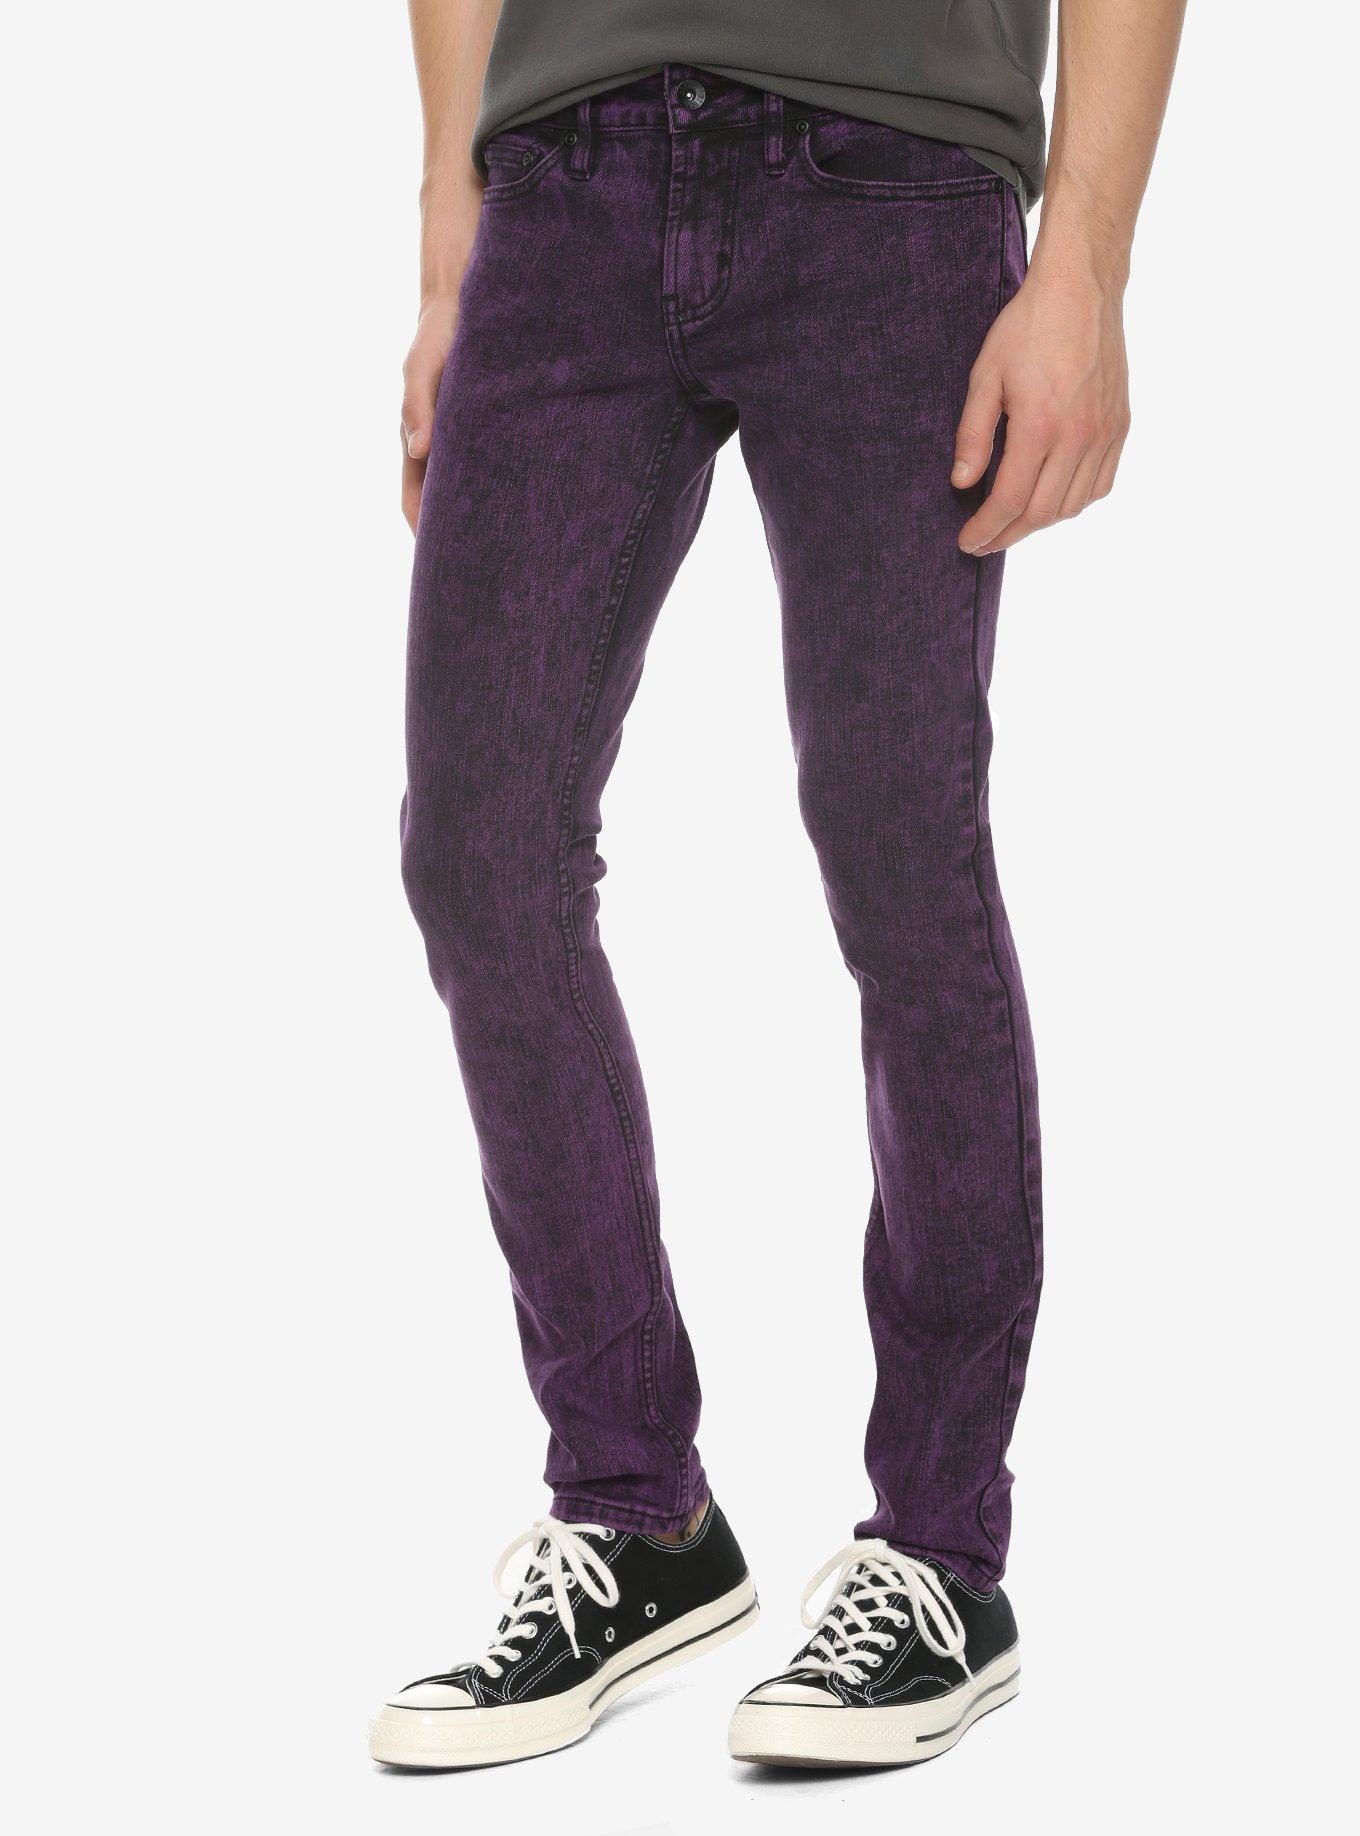 HT Denim Purple Acid Wash Skinny Jeans, PURPLE, hi-res